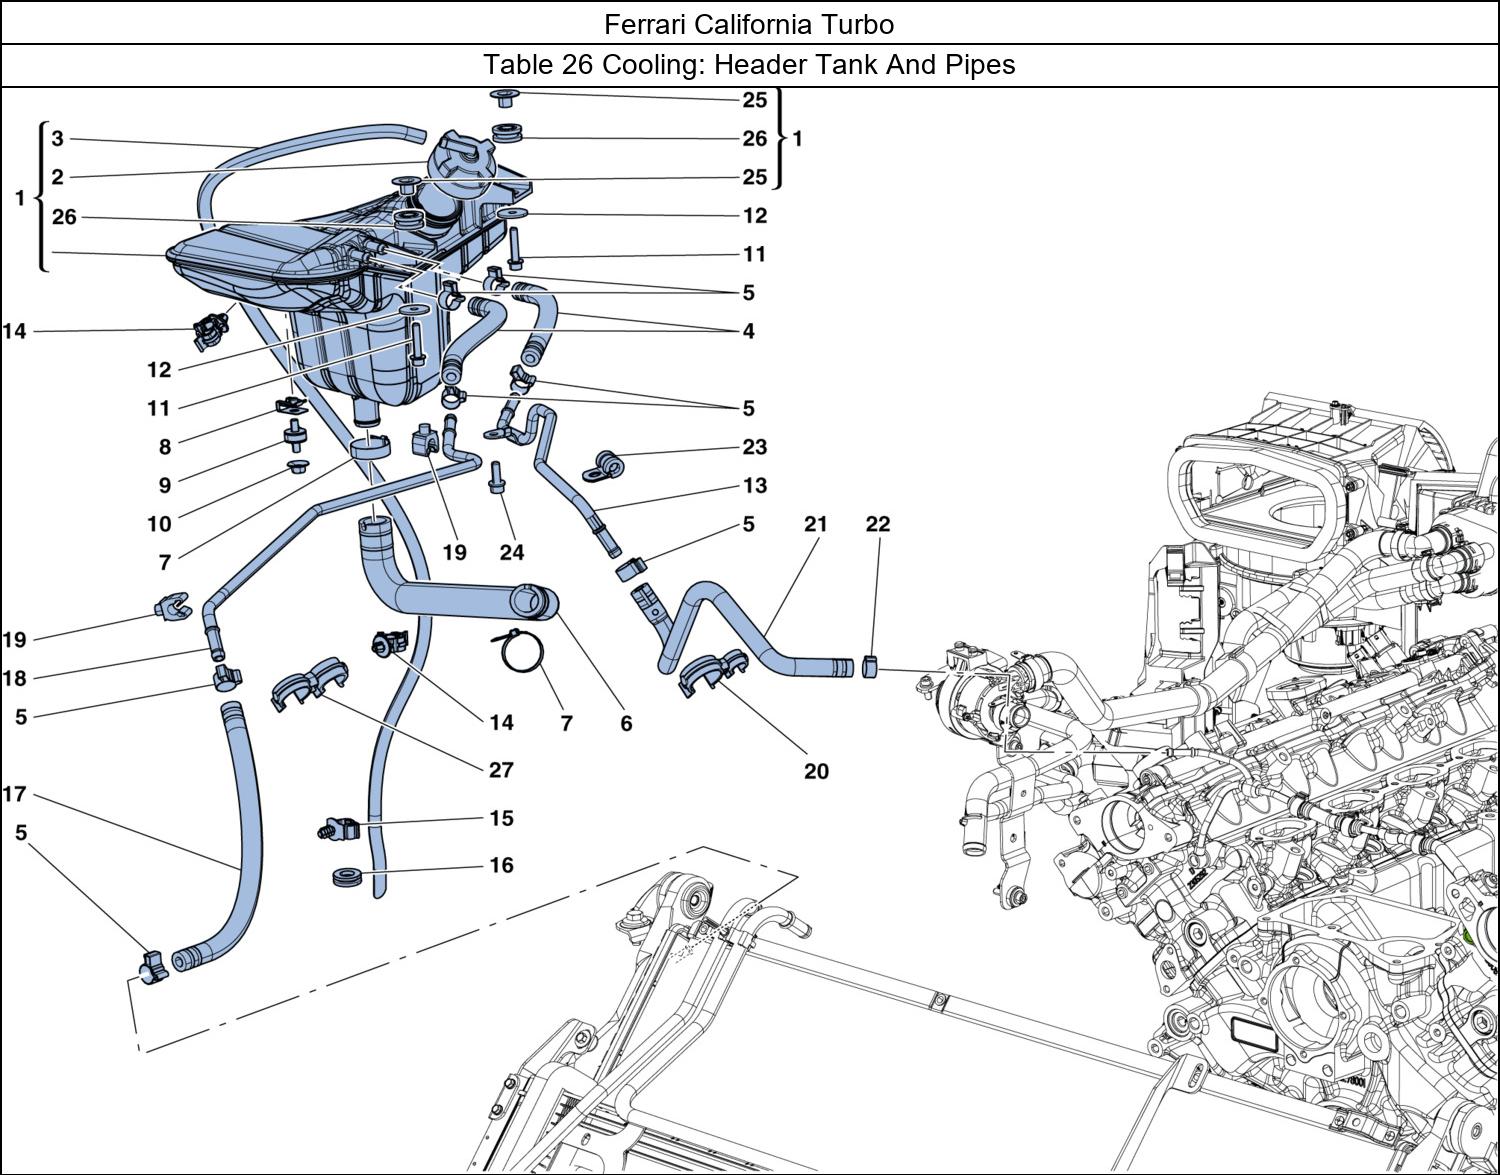 Ferrari Parts Ferrari California Turbo Table 26 Cooling: Header Tank And Pipes